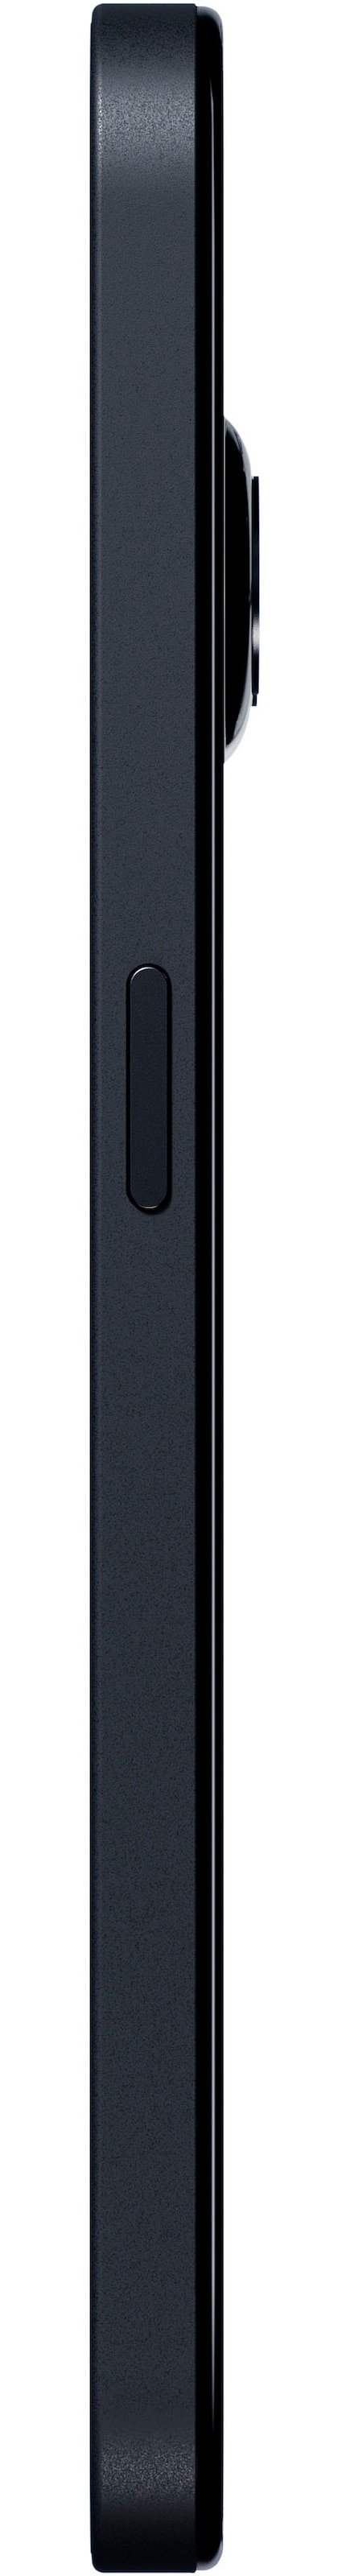 NOTHING Smartphone »Phone 2a«, schwarz, 17 cm/6,7 Zoll, 128 GB Speicherplatz, 50 MP Kamera